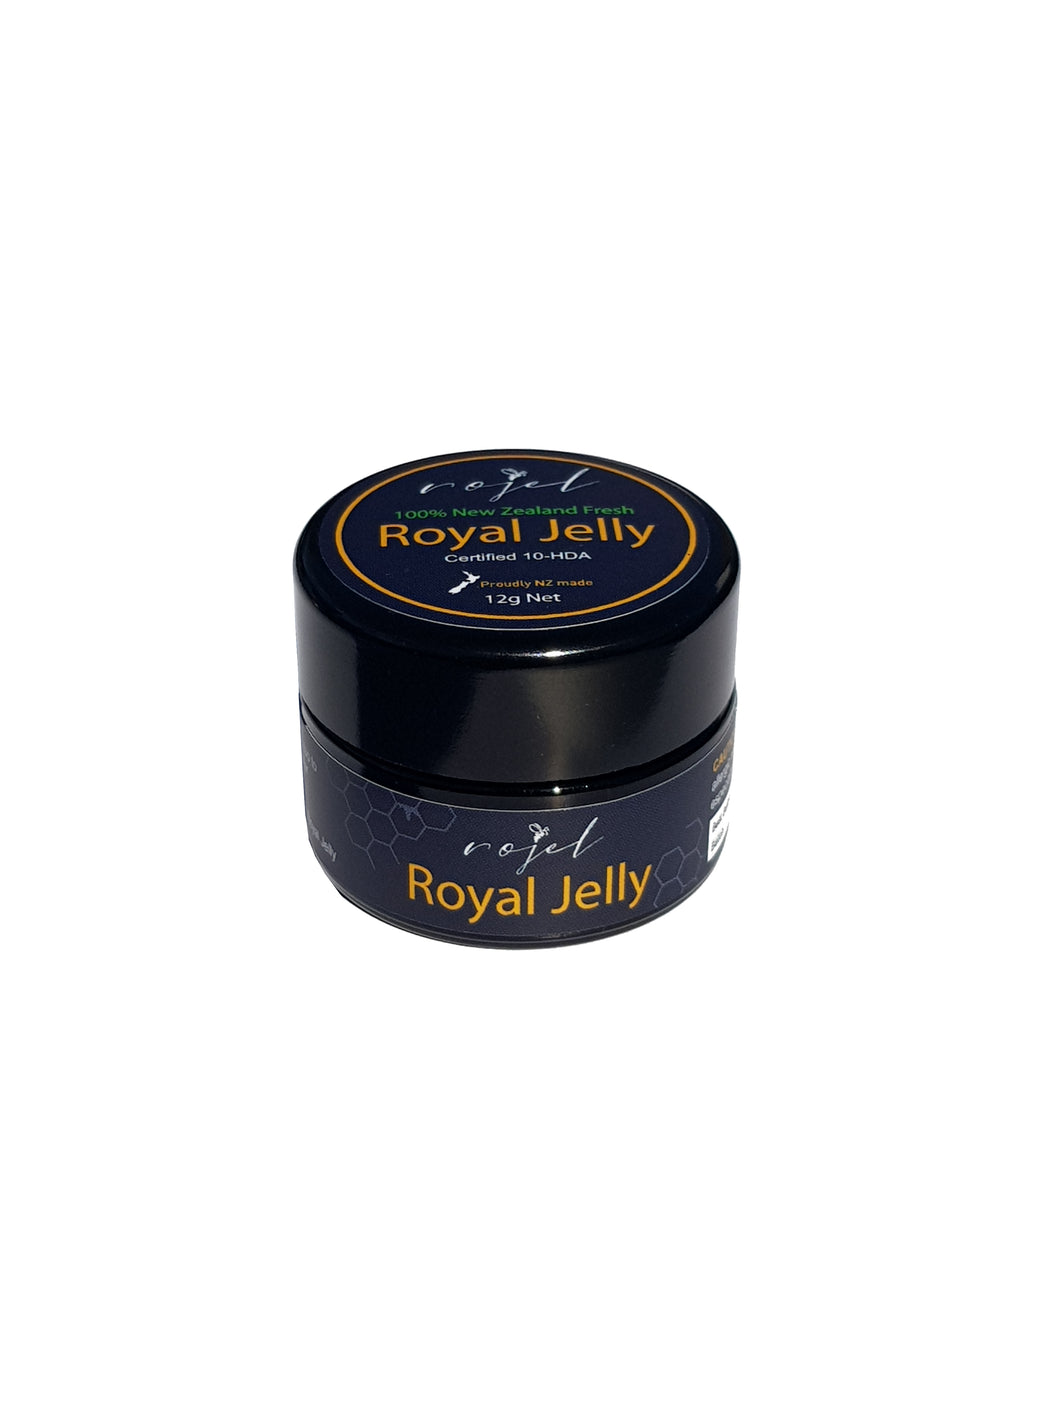 New Zealand fresh royal jelly benefits 로얄제리